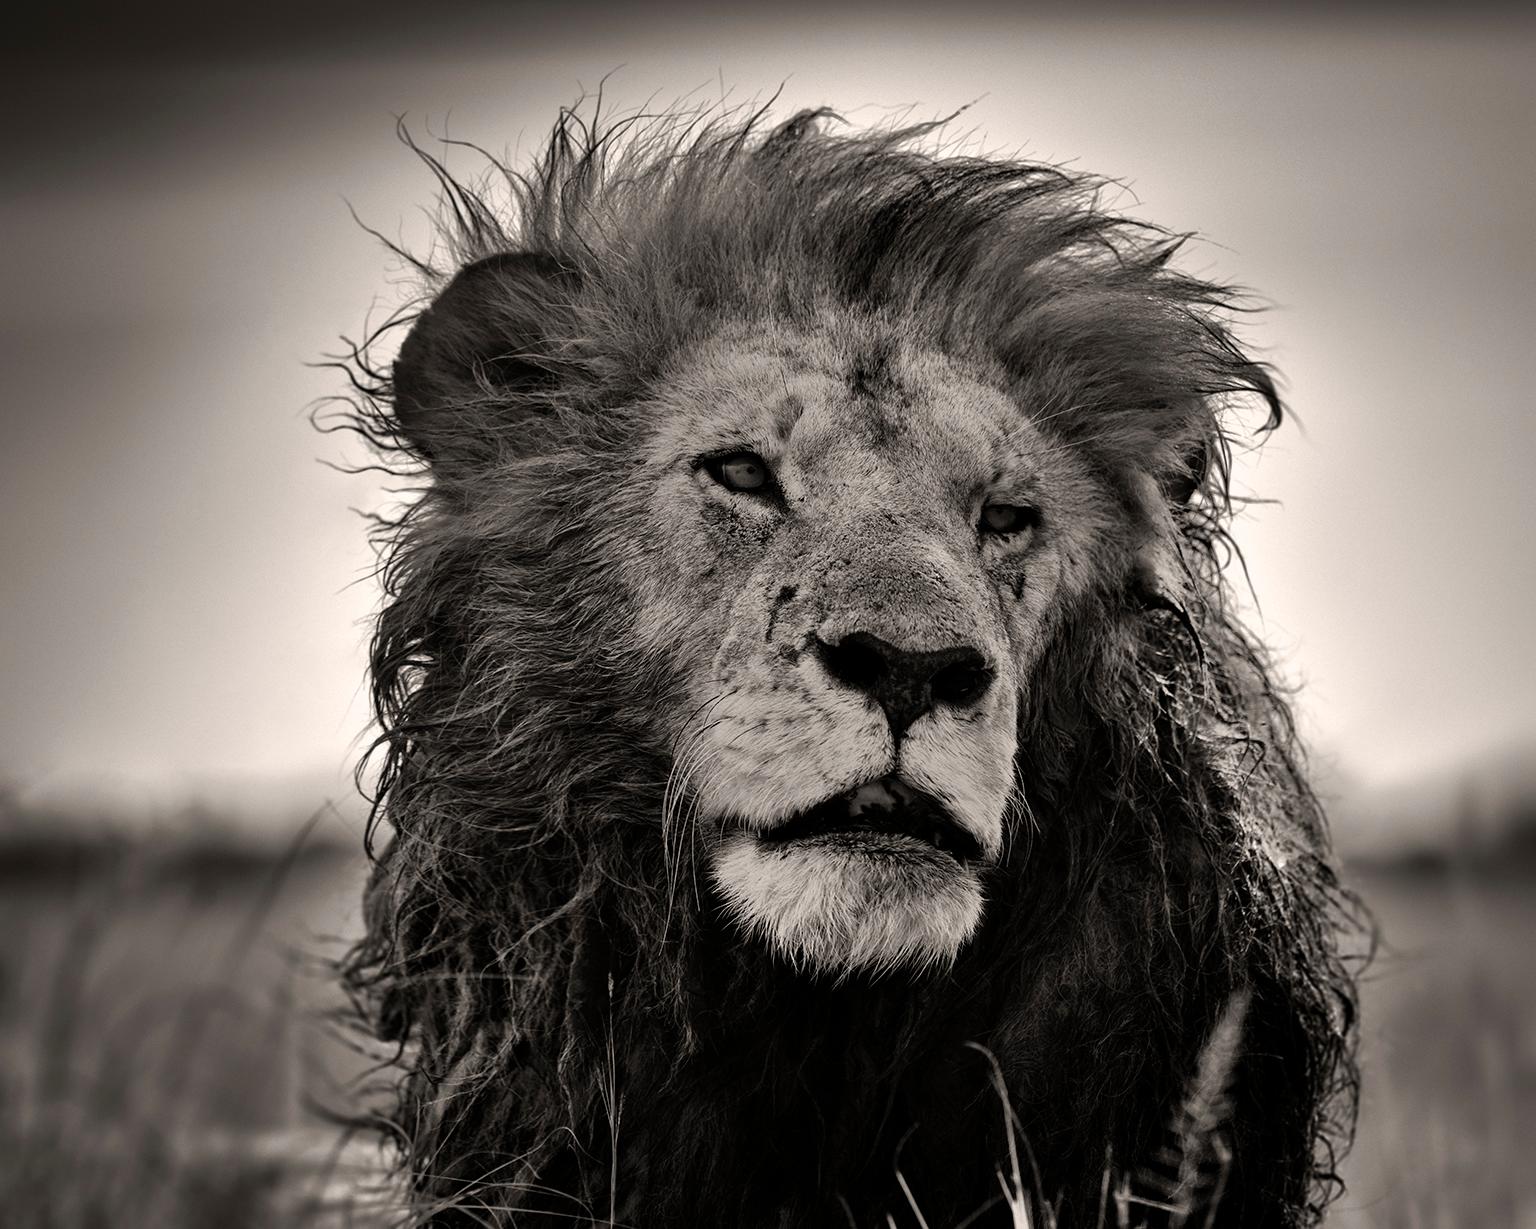 Last Warrior, Kenya, Lion, animal, wildlife, black and white photography